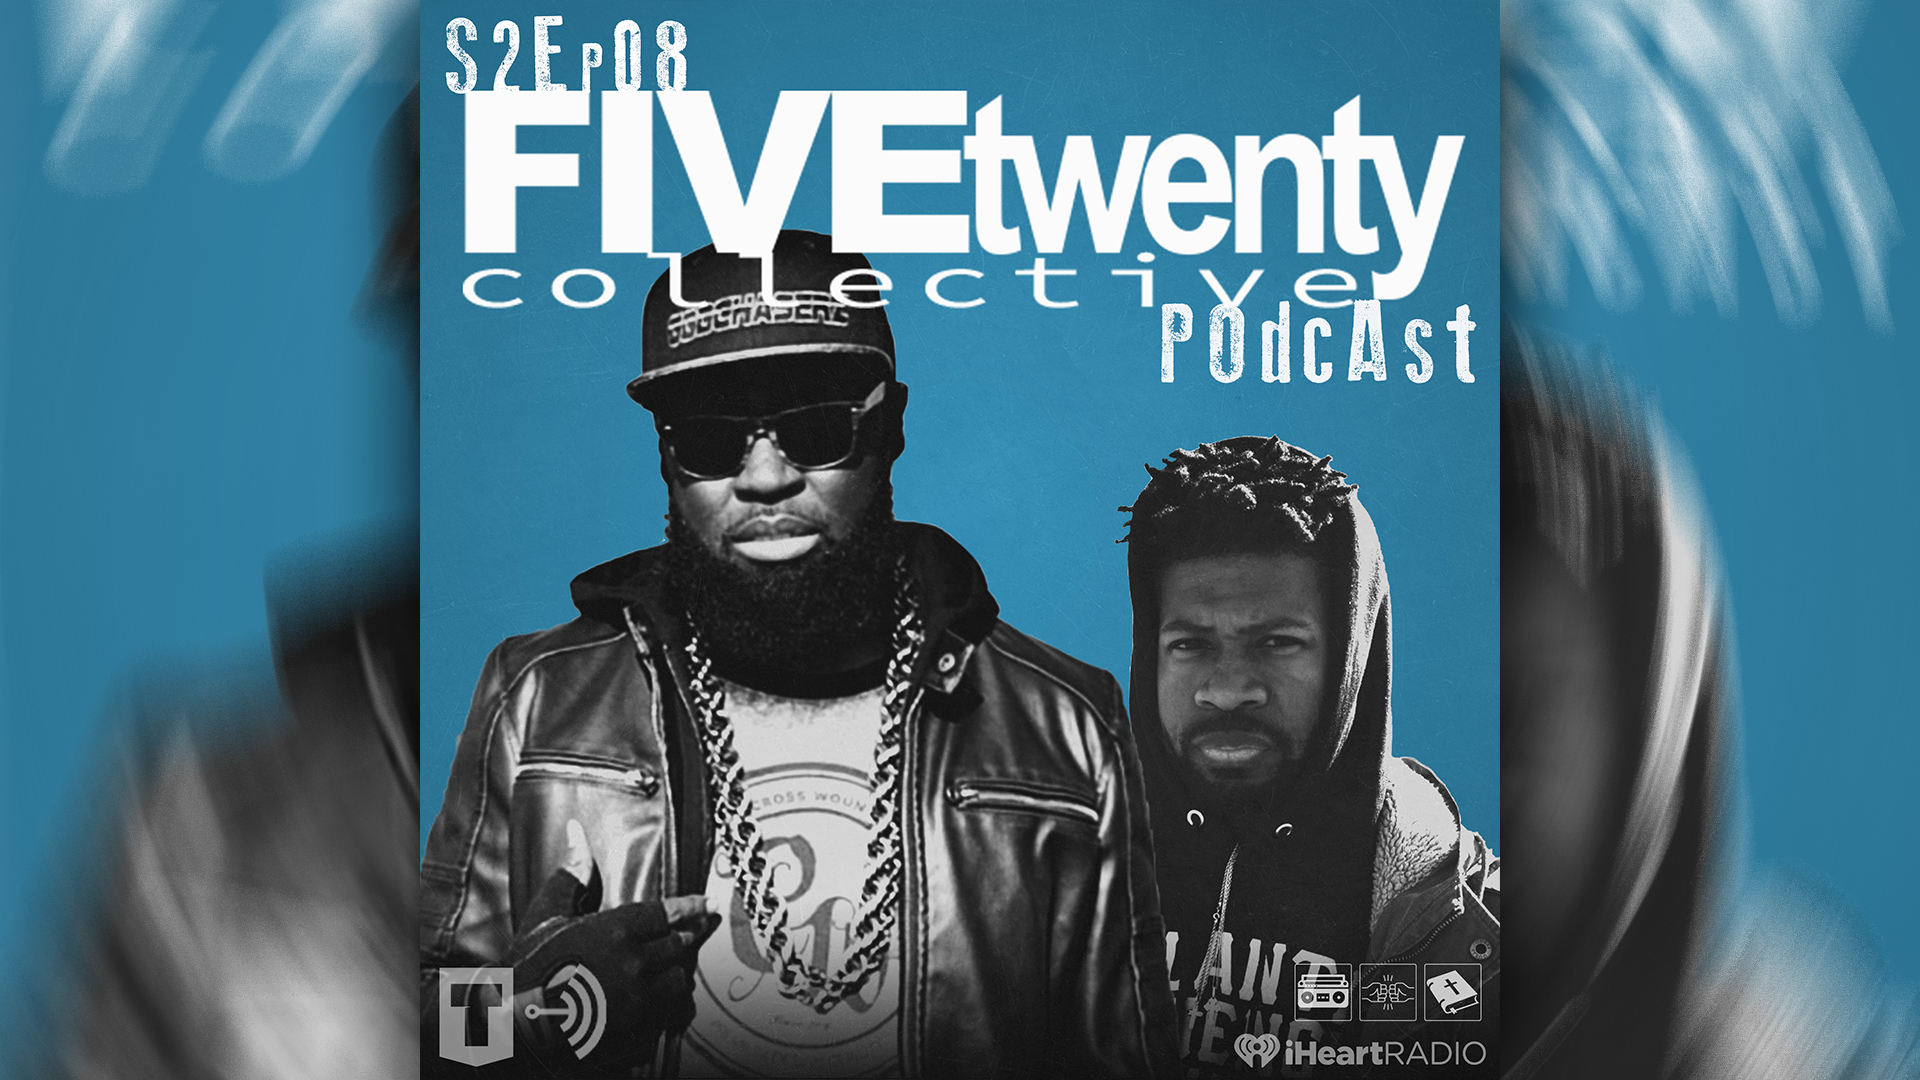 FiveTwenty Collective Podcast: Season Two | Ep. 08 @IAmBrinson @2point0TnT @EricBoston3 @Iam_NateDogg @FiveTwentyCHH